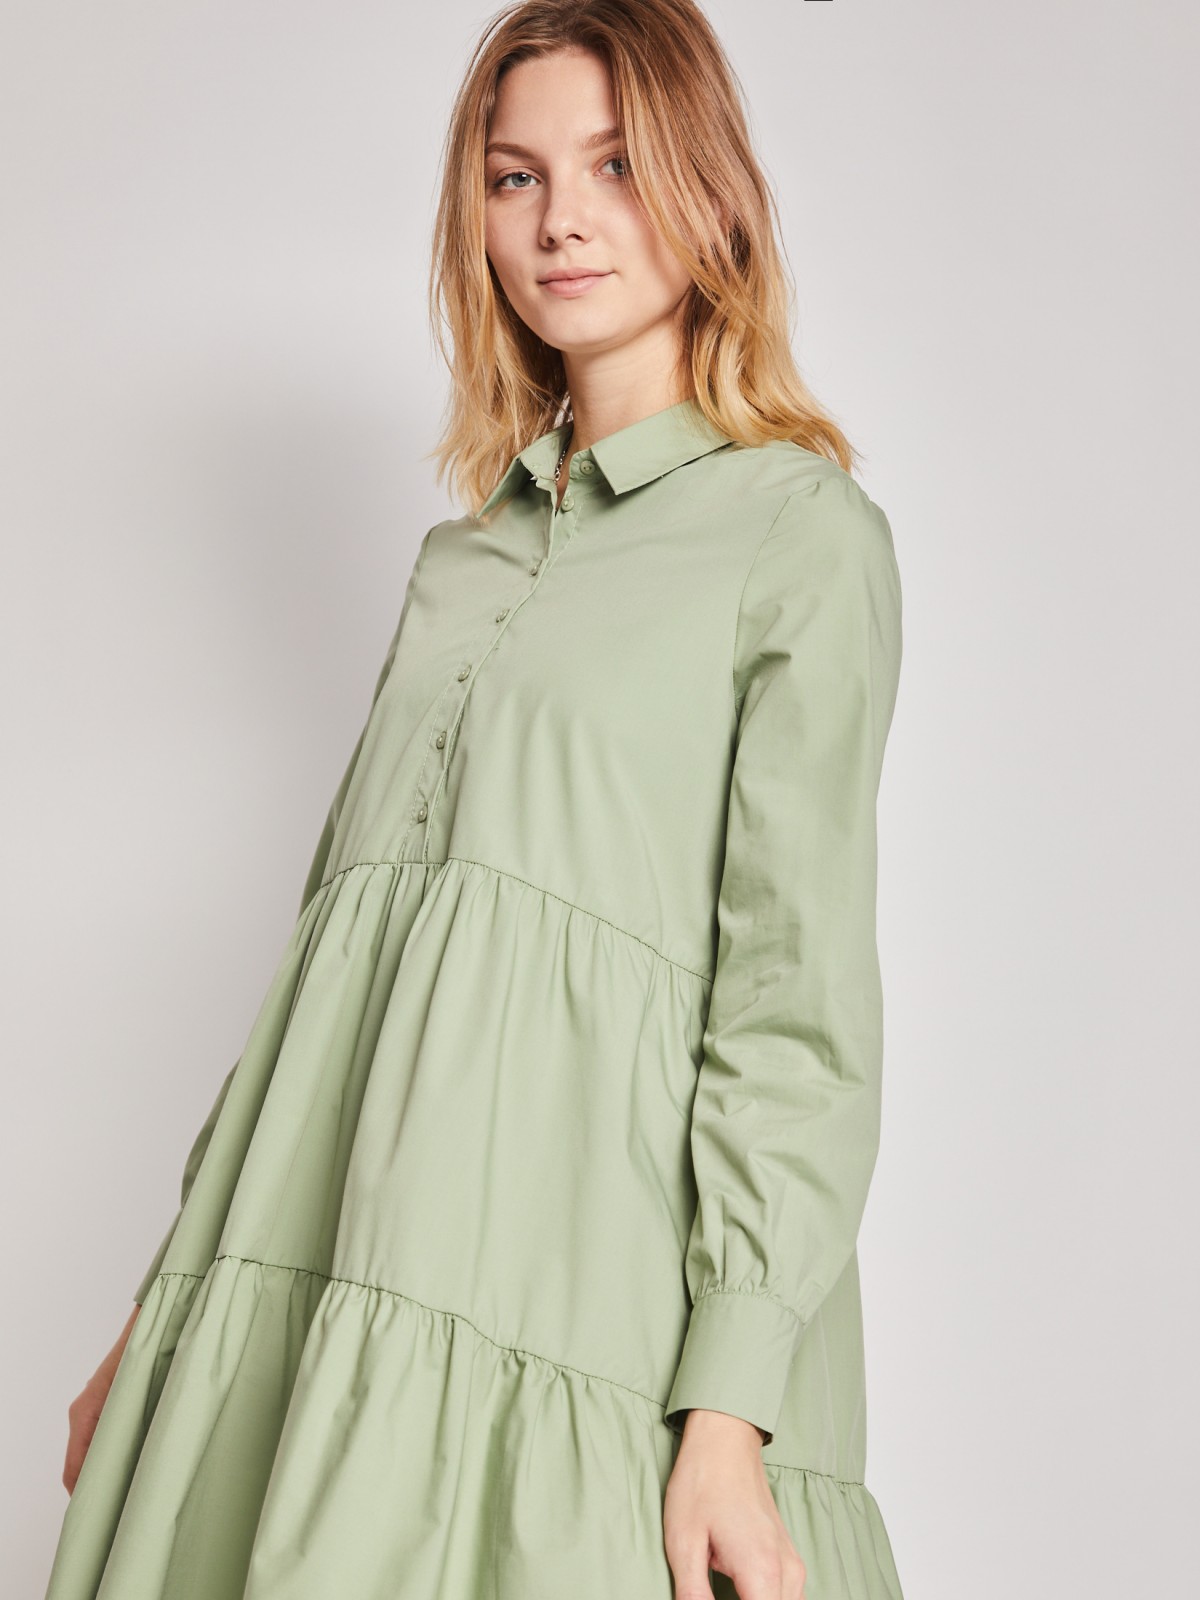 Ярусное платье-рубашка zolla 022138291223, цвет светло-зеленый, размер XS - фото 5